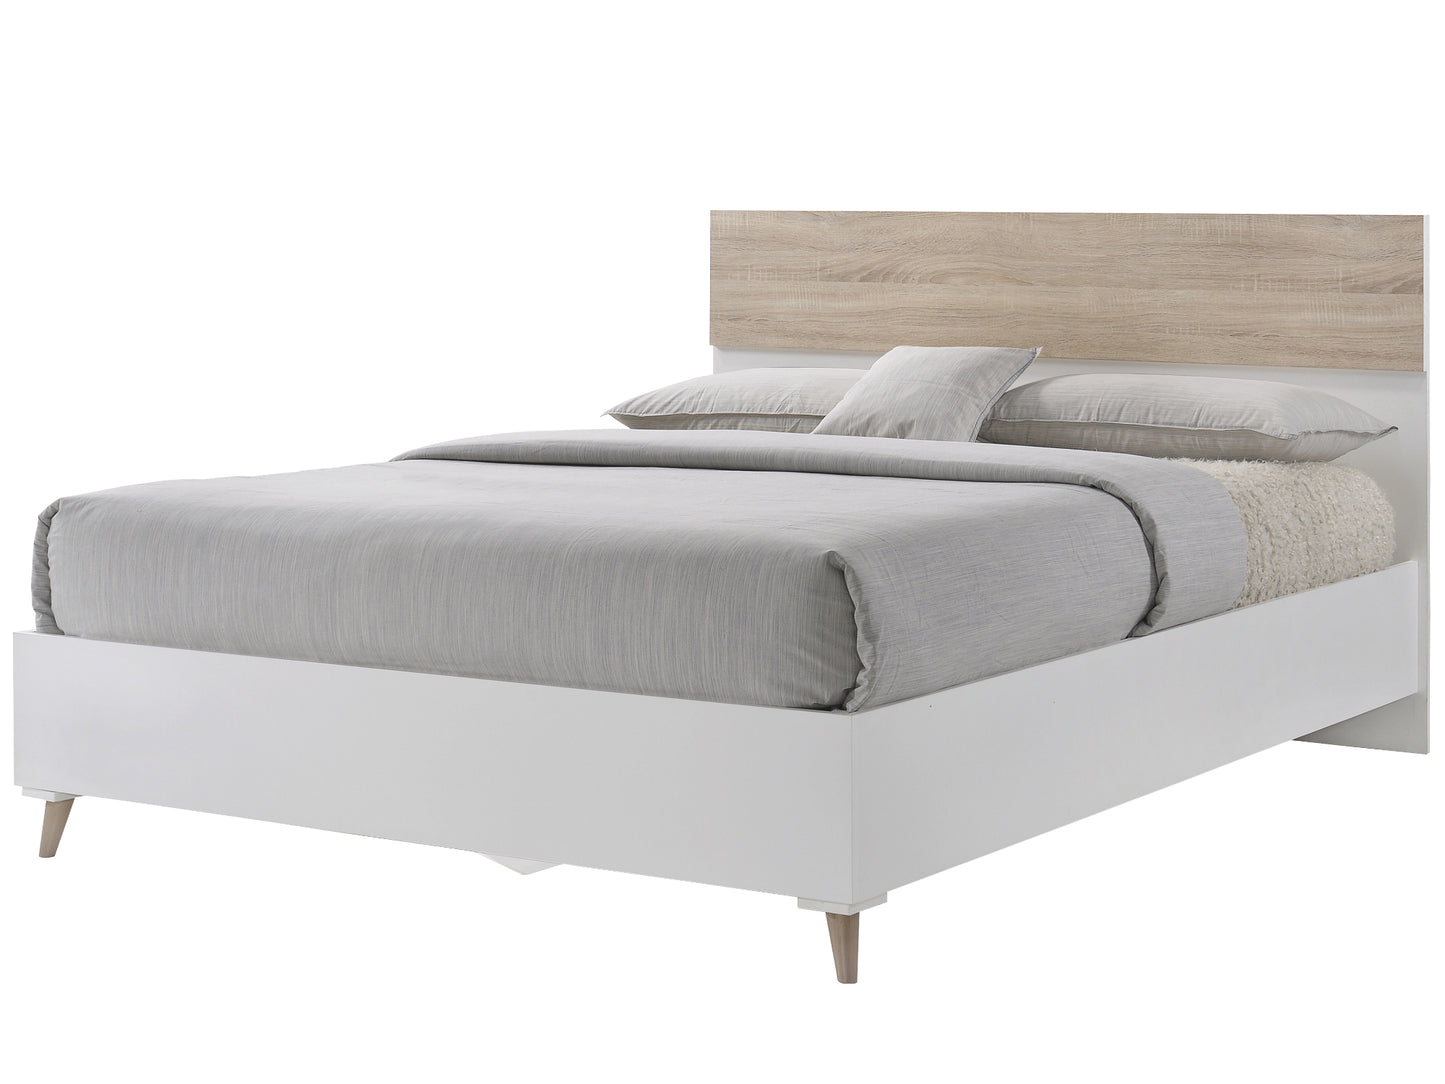 Stockholme Bedroom Furniture in White and Oak